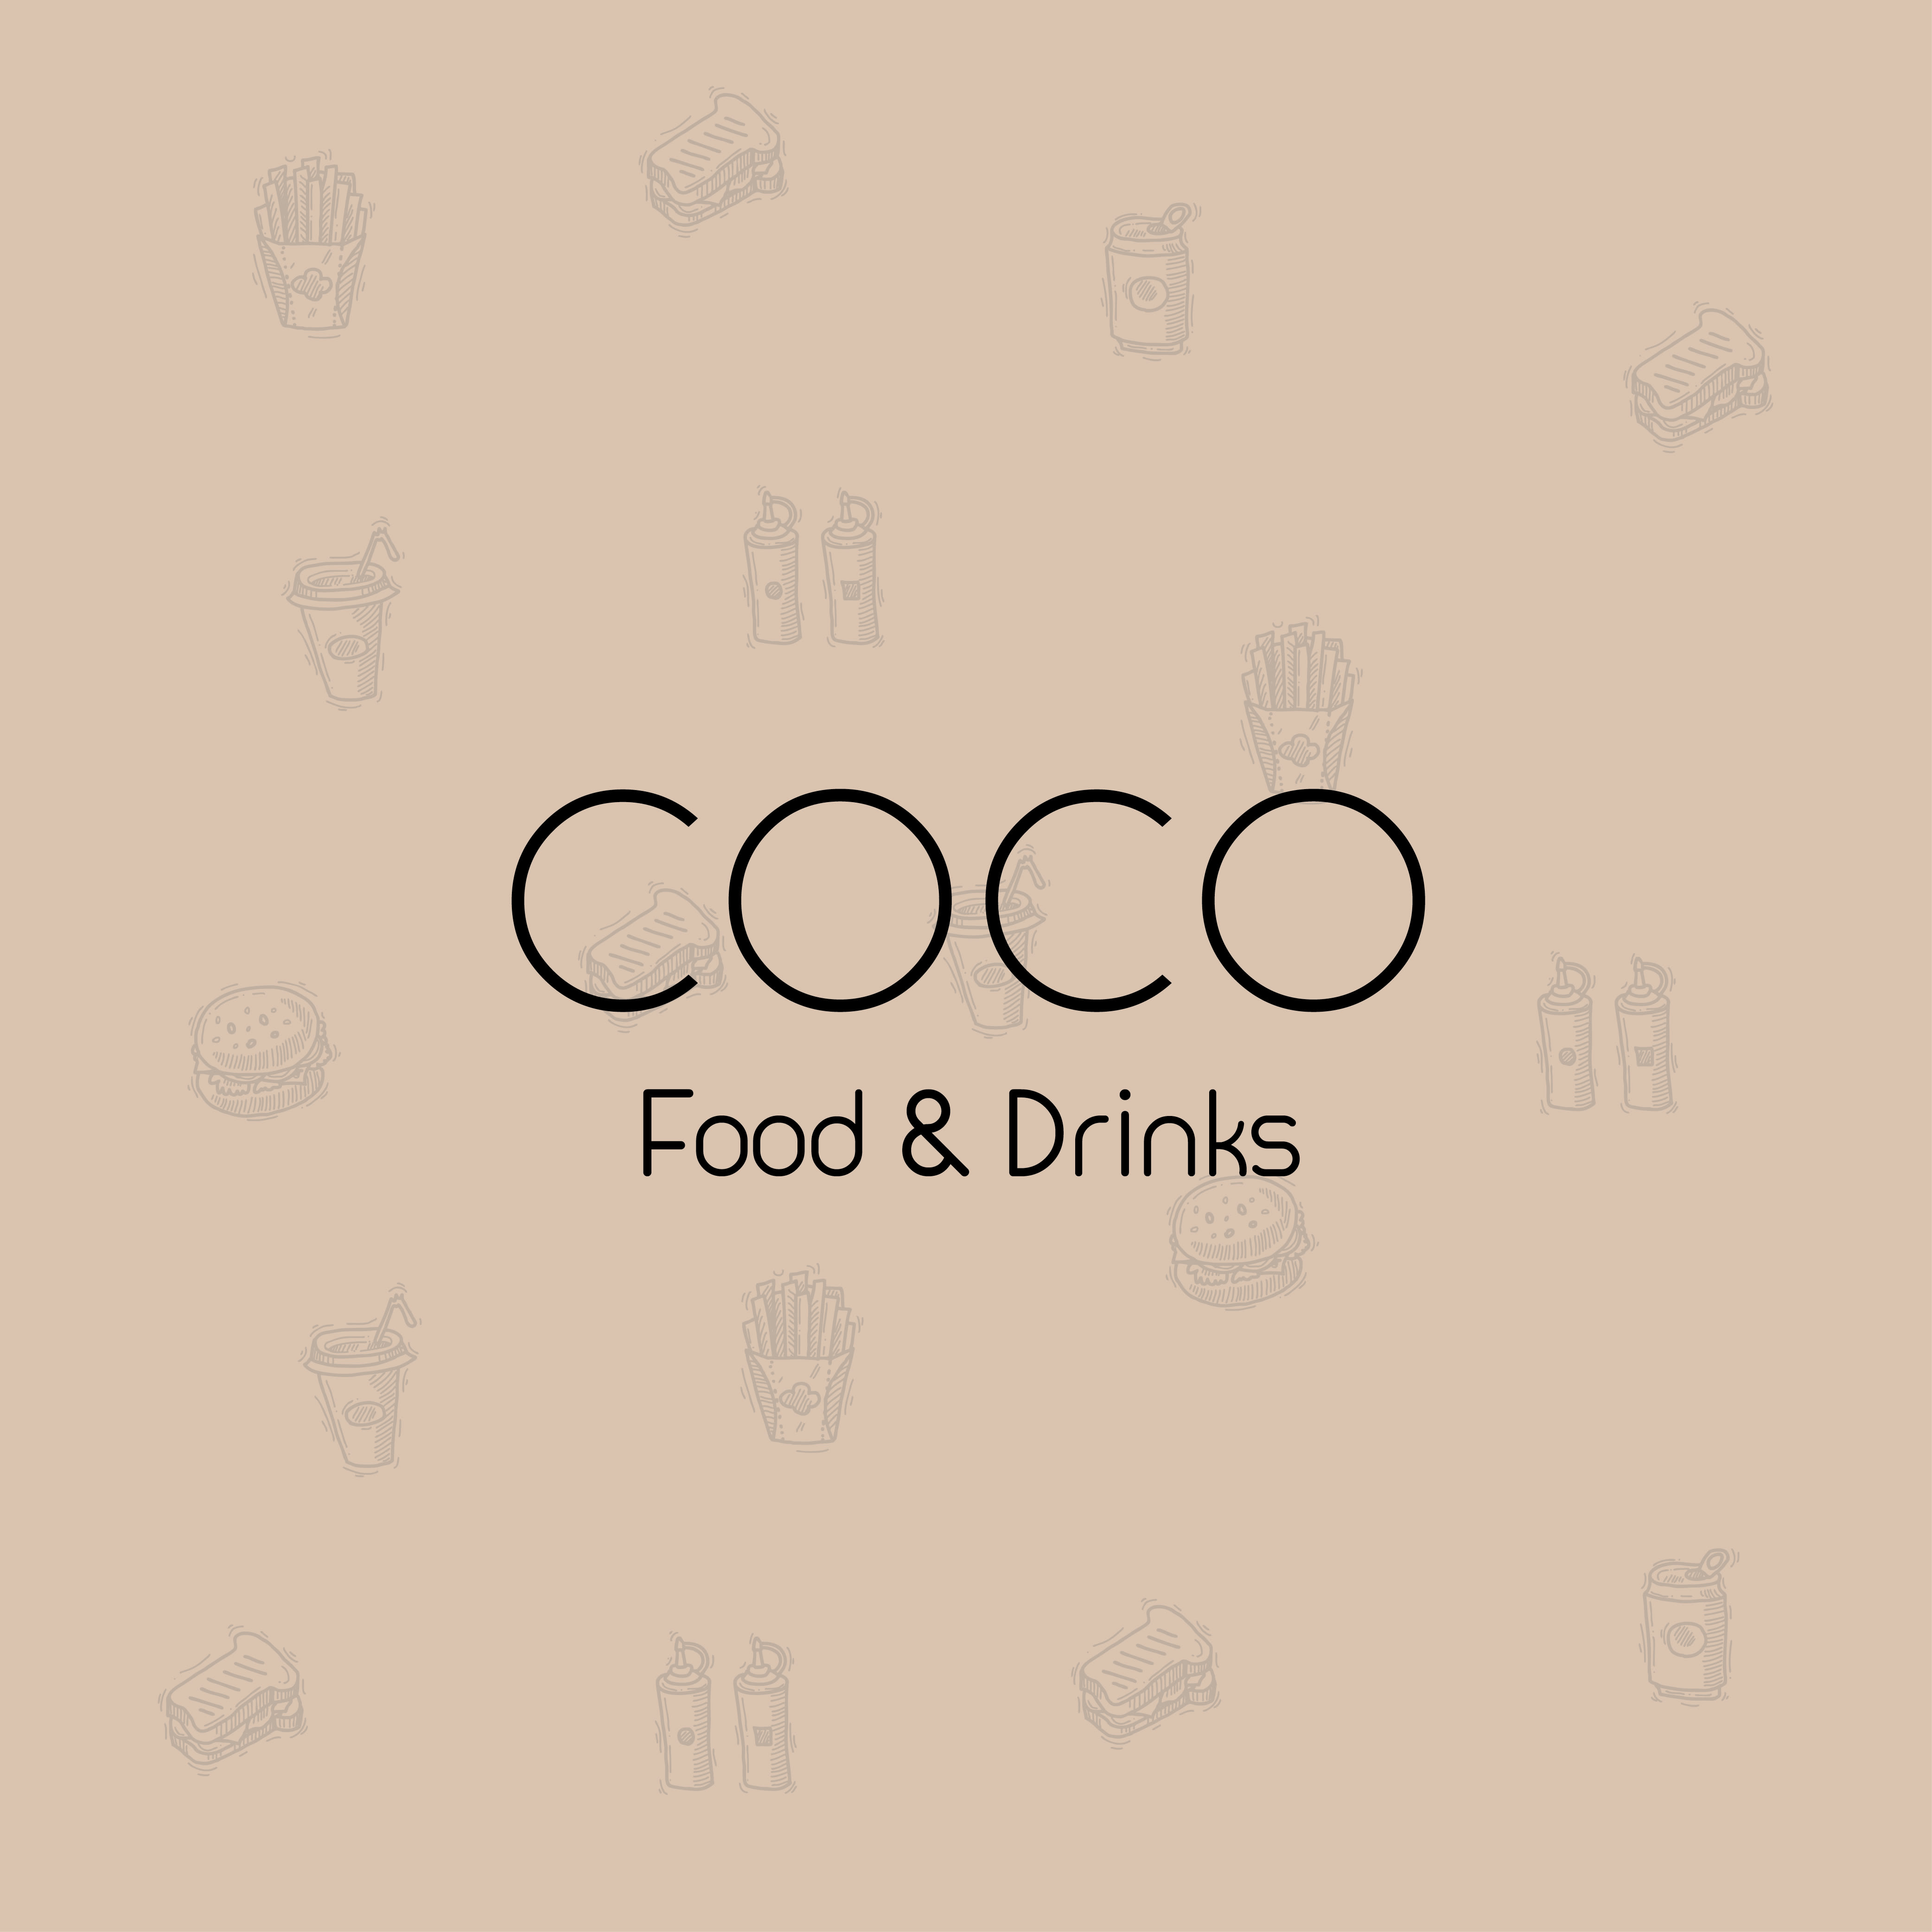 Coco - Food & Drinks